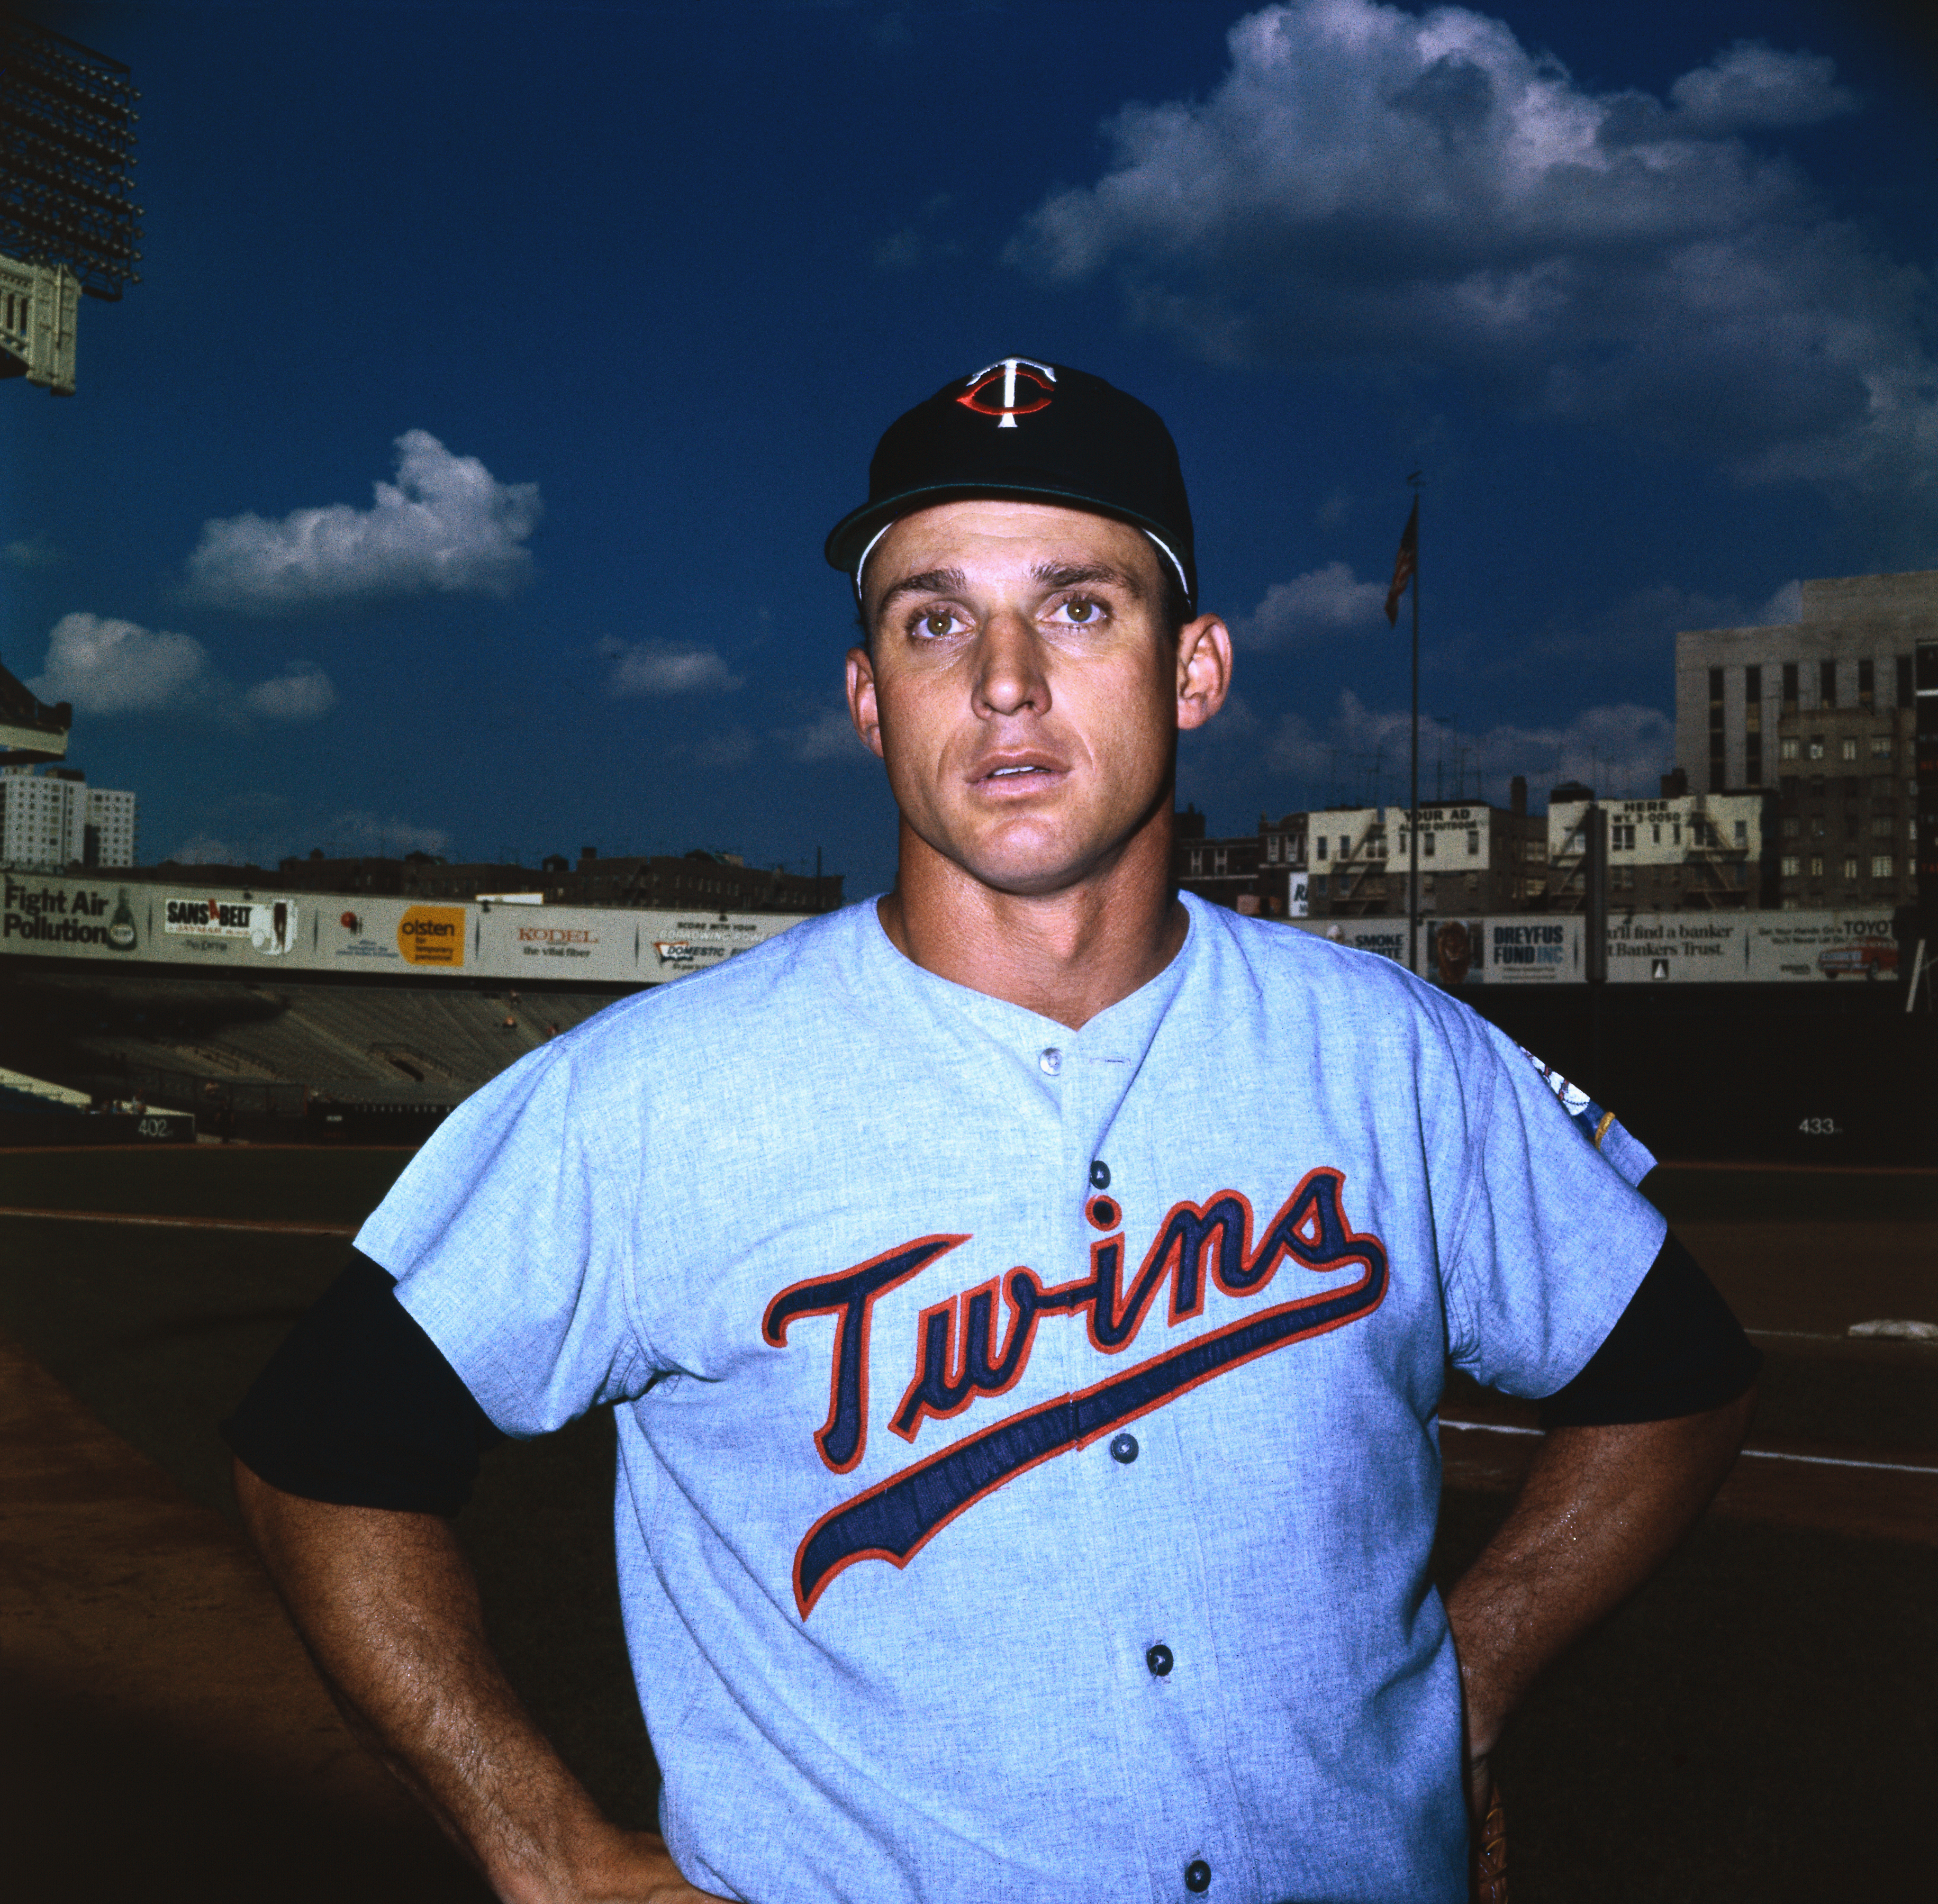 Bob Allison in Baseball Uniform